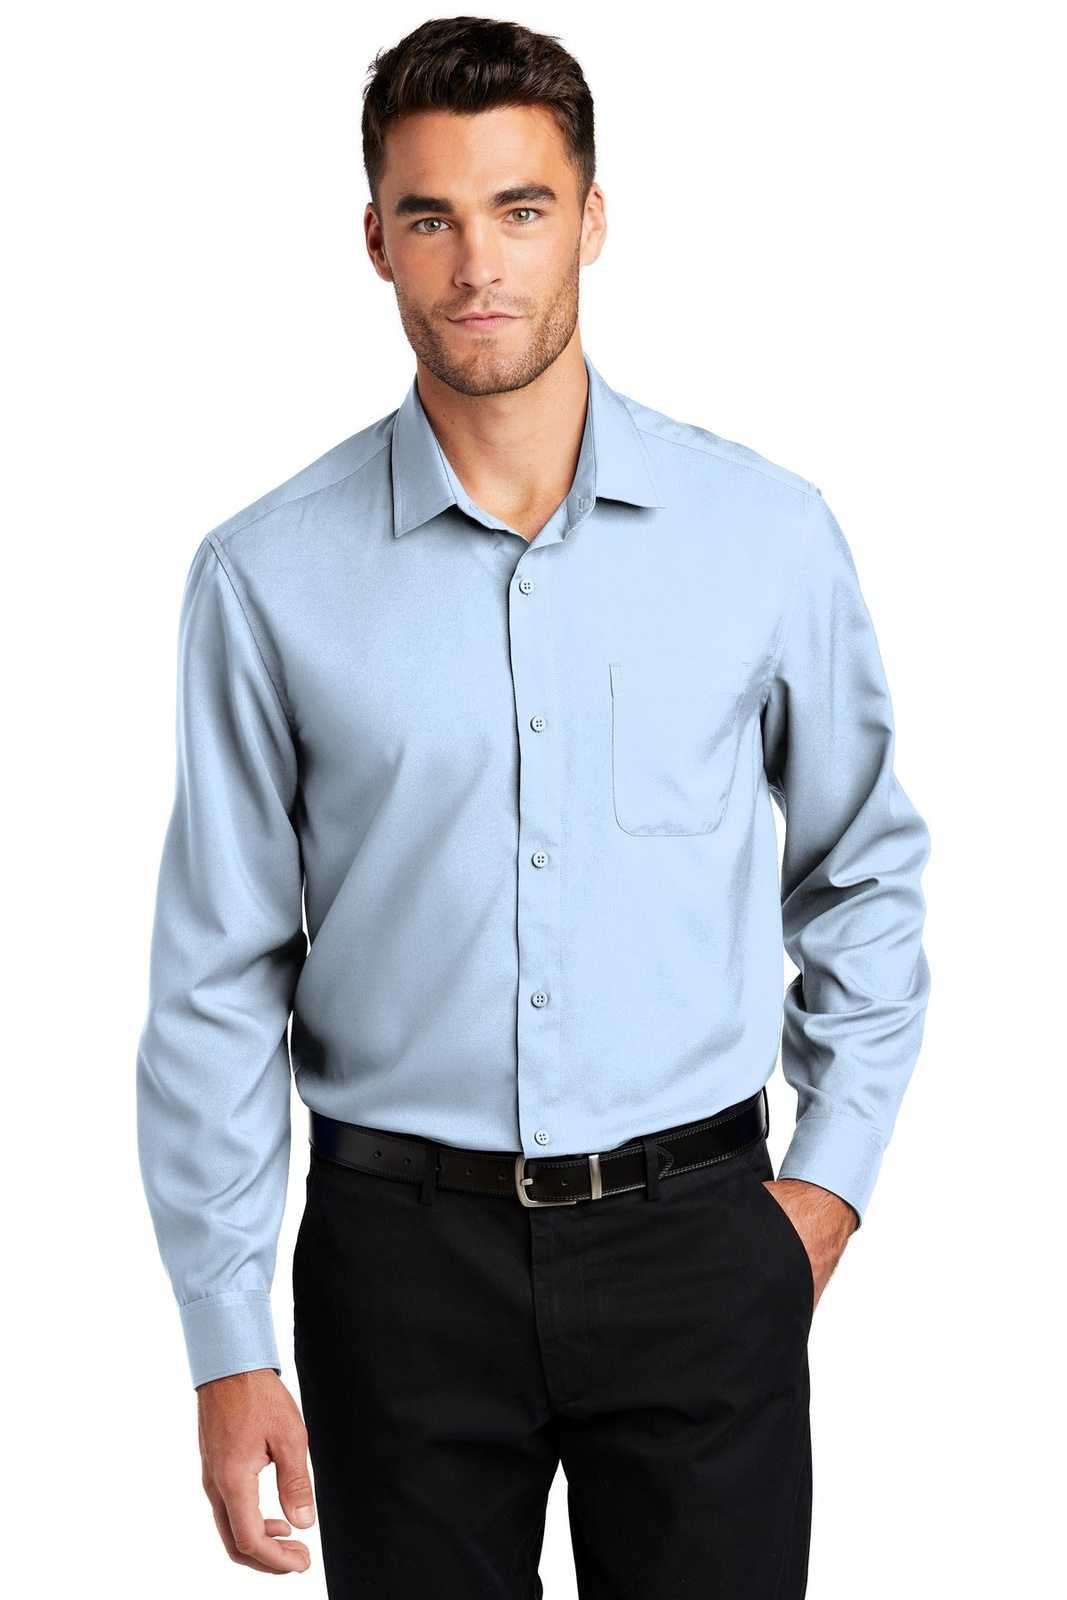 Port Authority W401 Long Sleeve Performance Staff Shirt - Cloud Blue - HIT a Double - 1